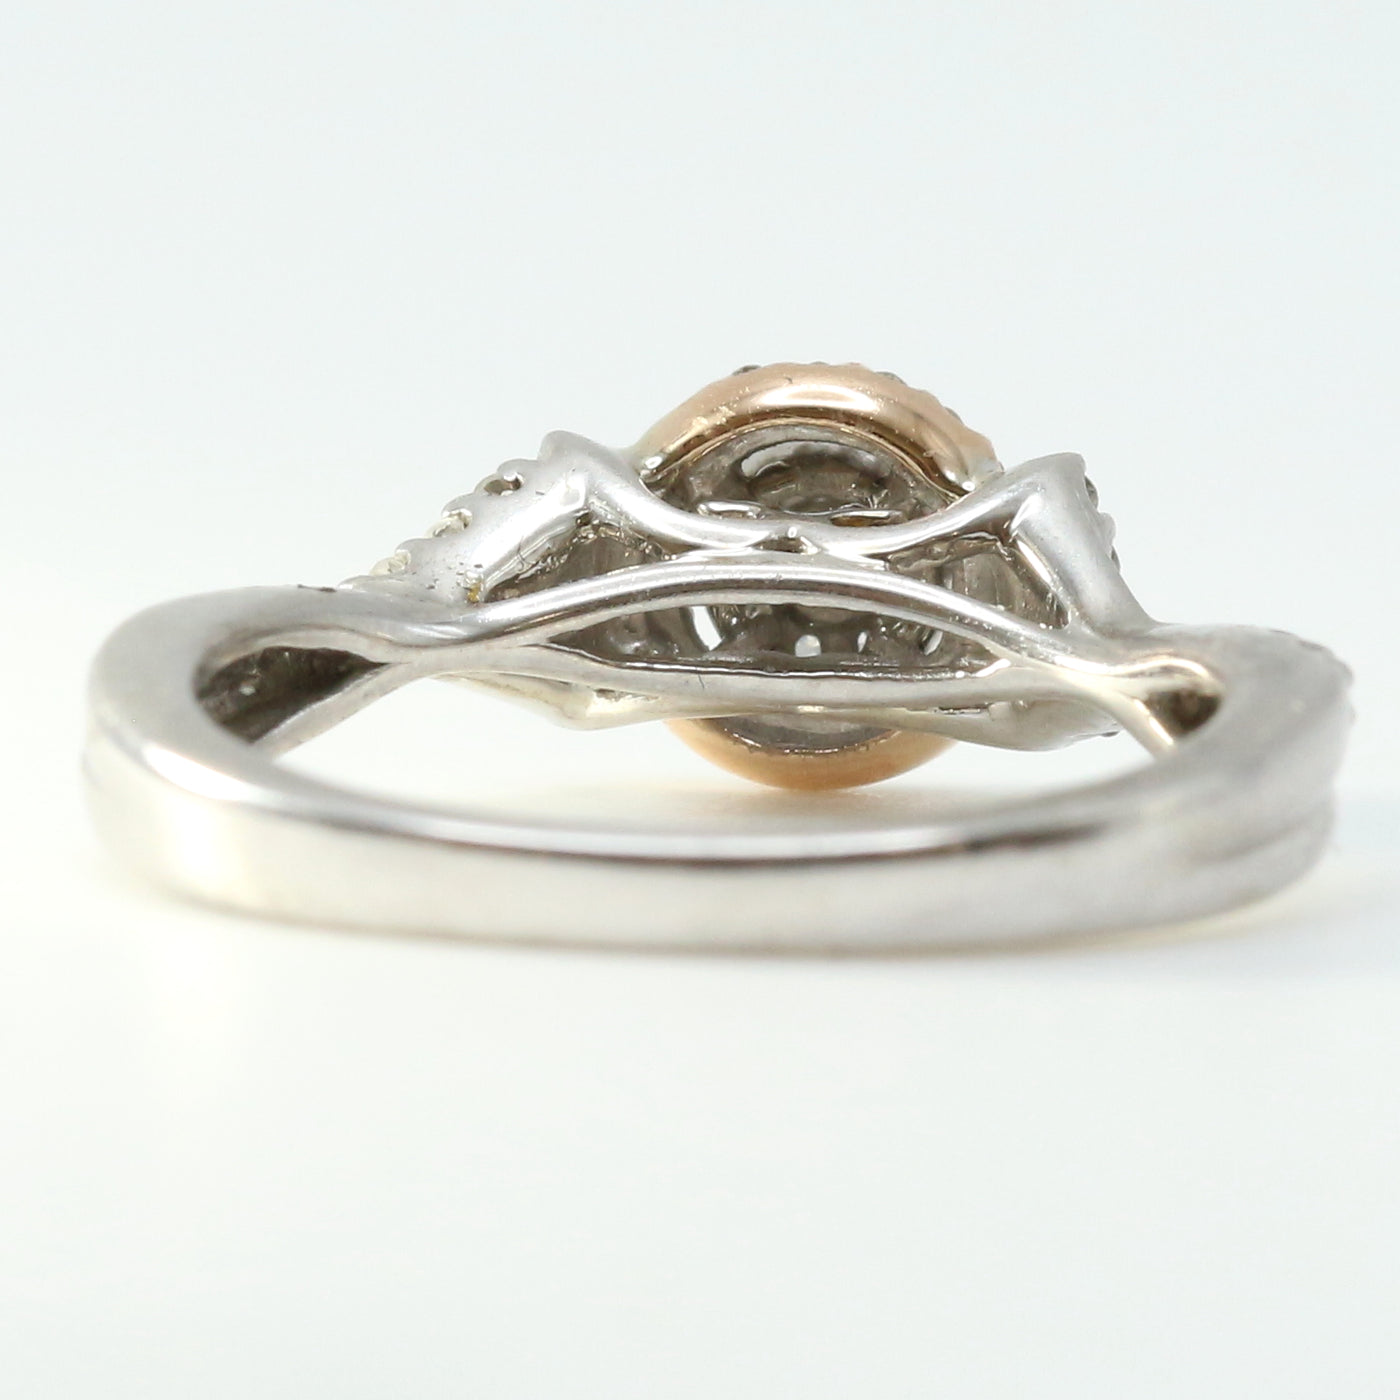 Diamond & Rose Gold Ring